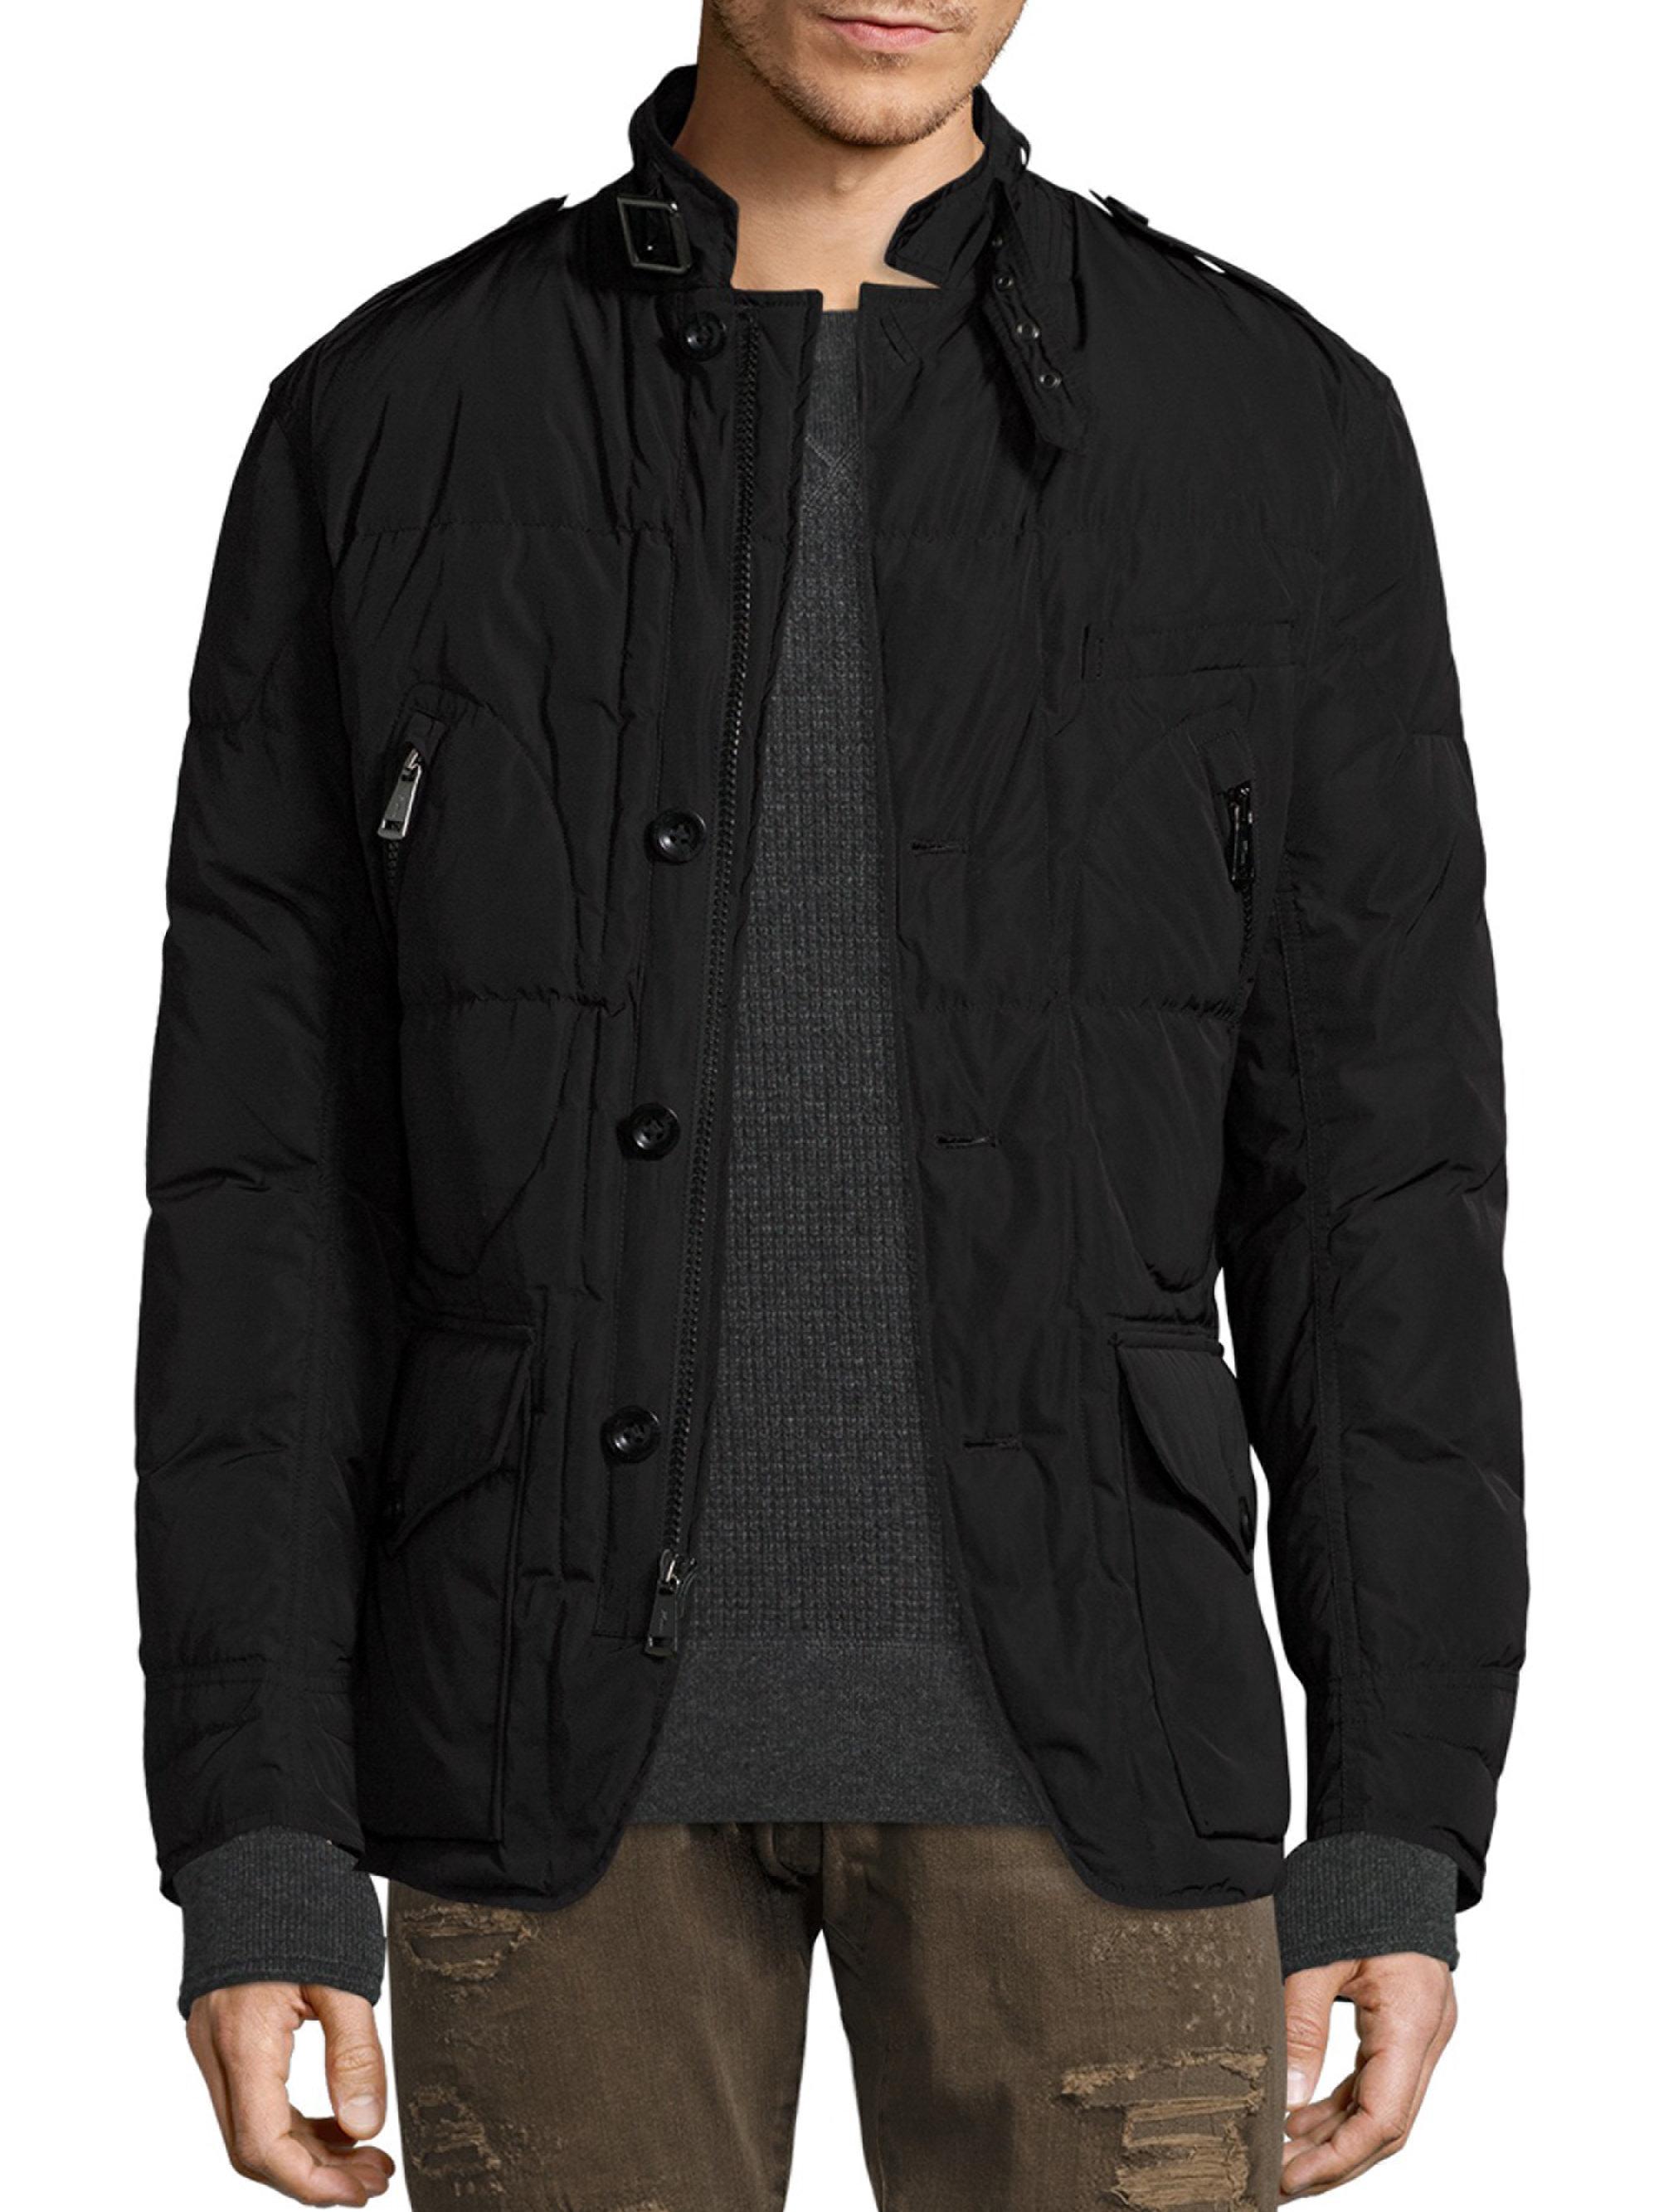 Lyst - Polo Ralph Lauren Explorer Sports Jacket in Black for Men